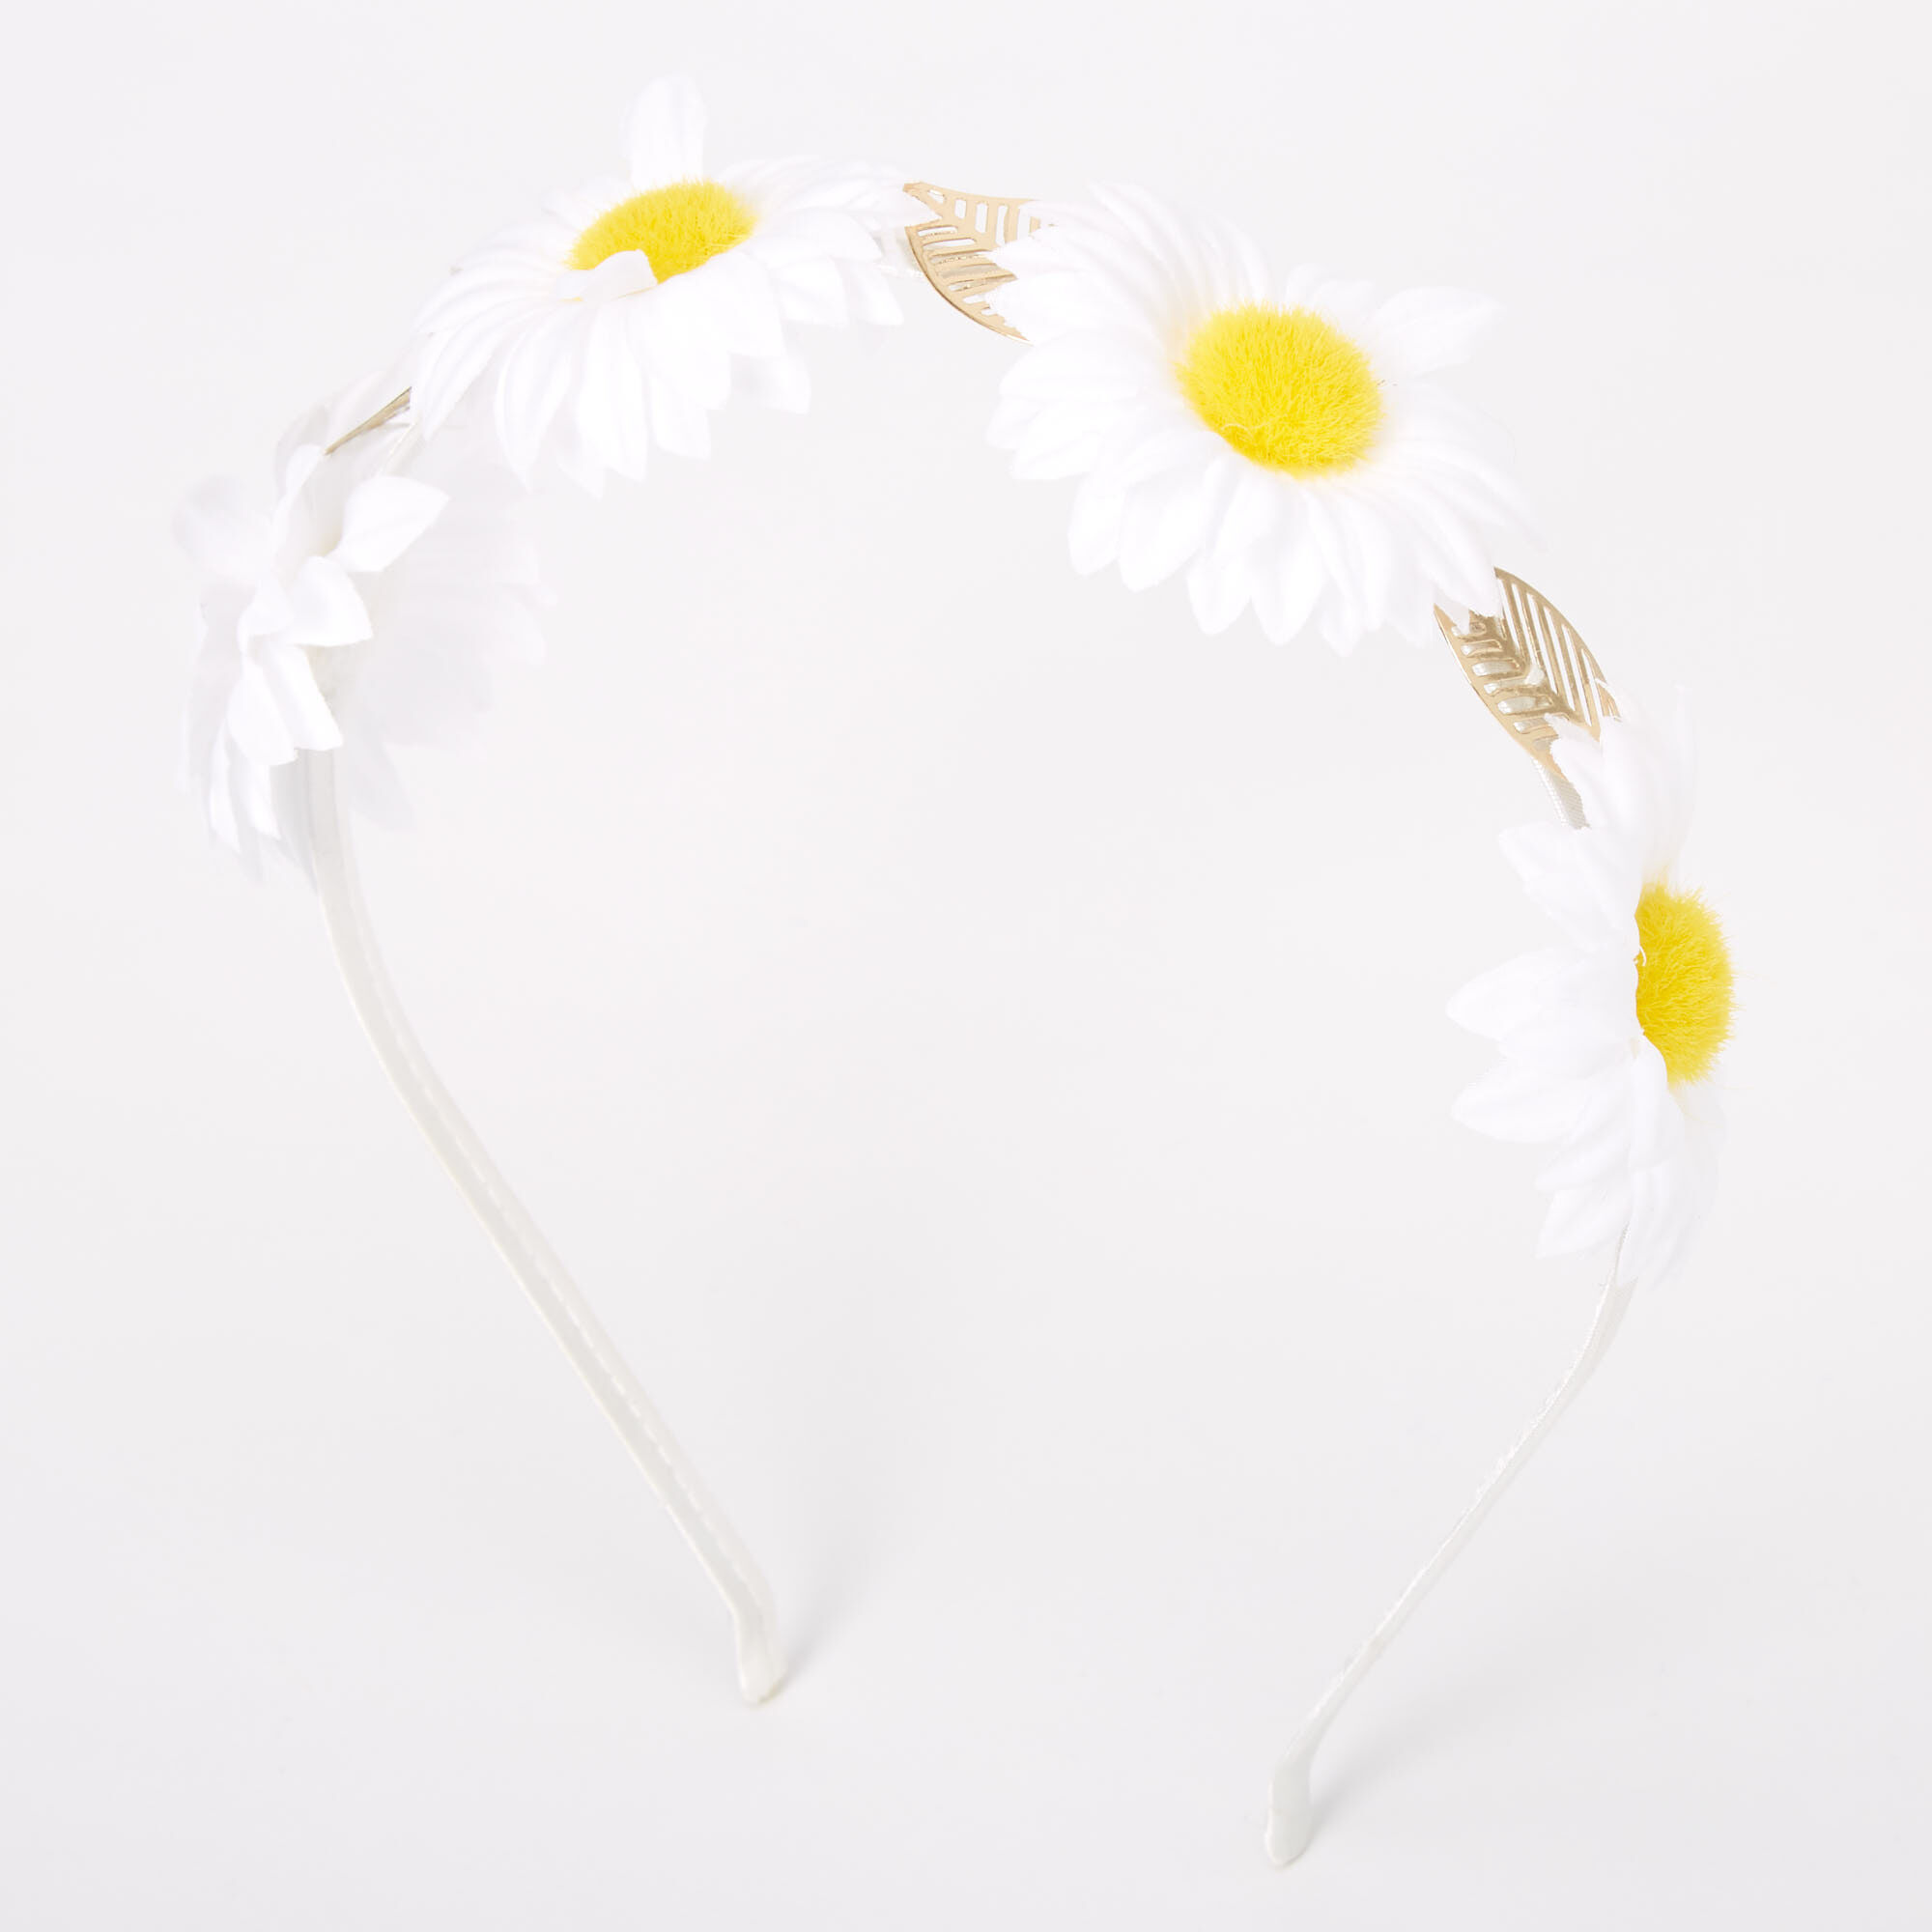 White flower headband